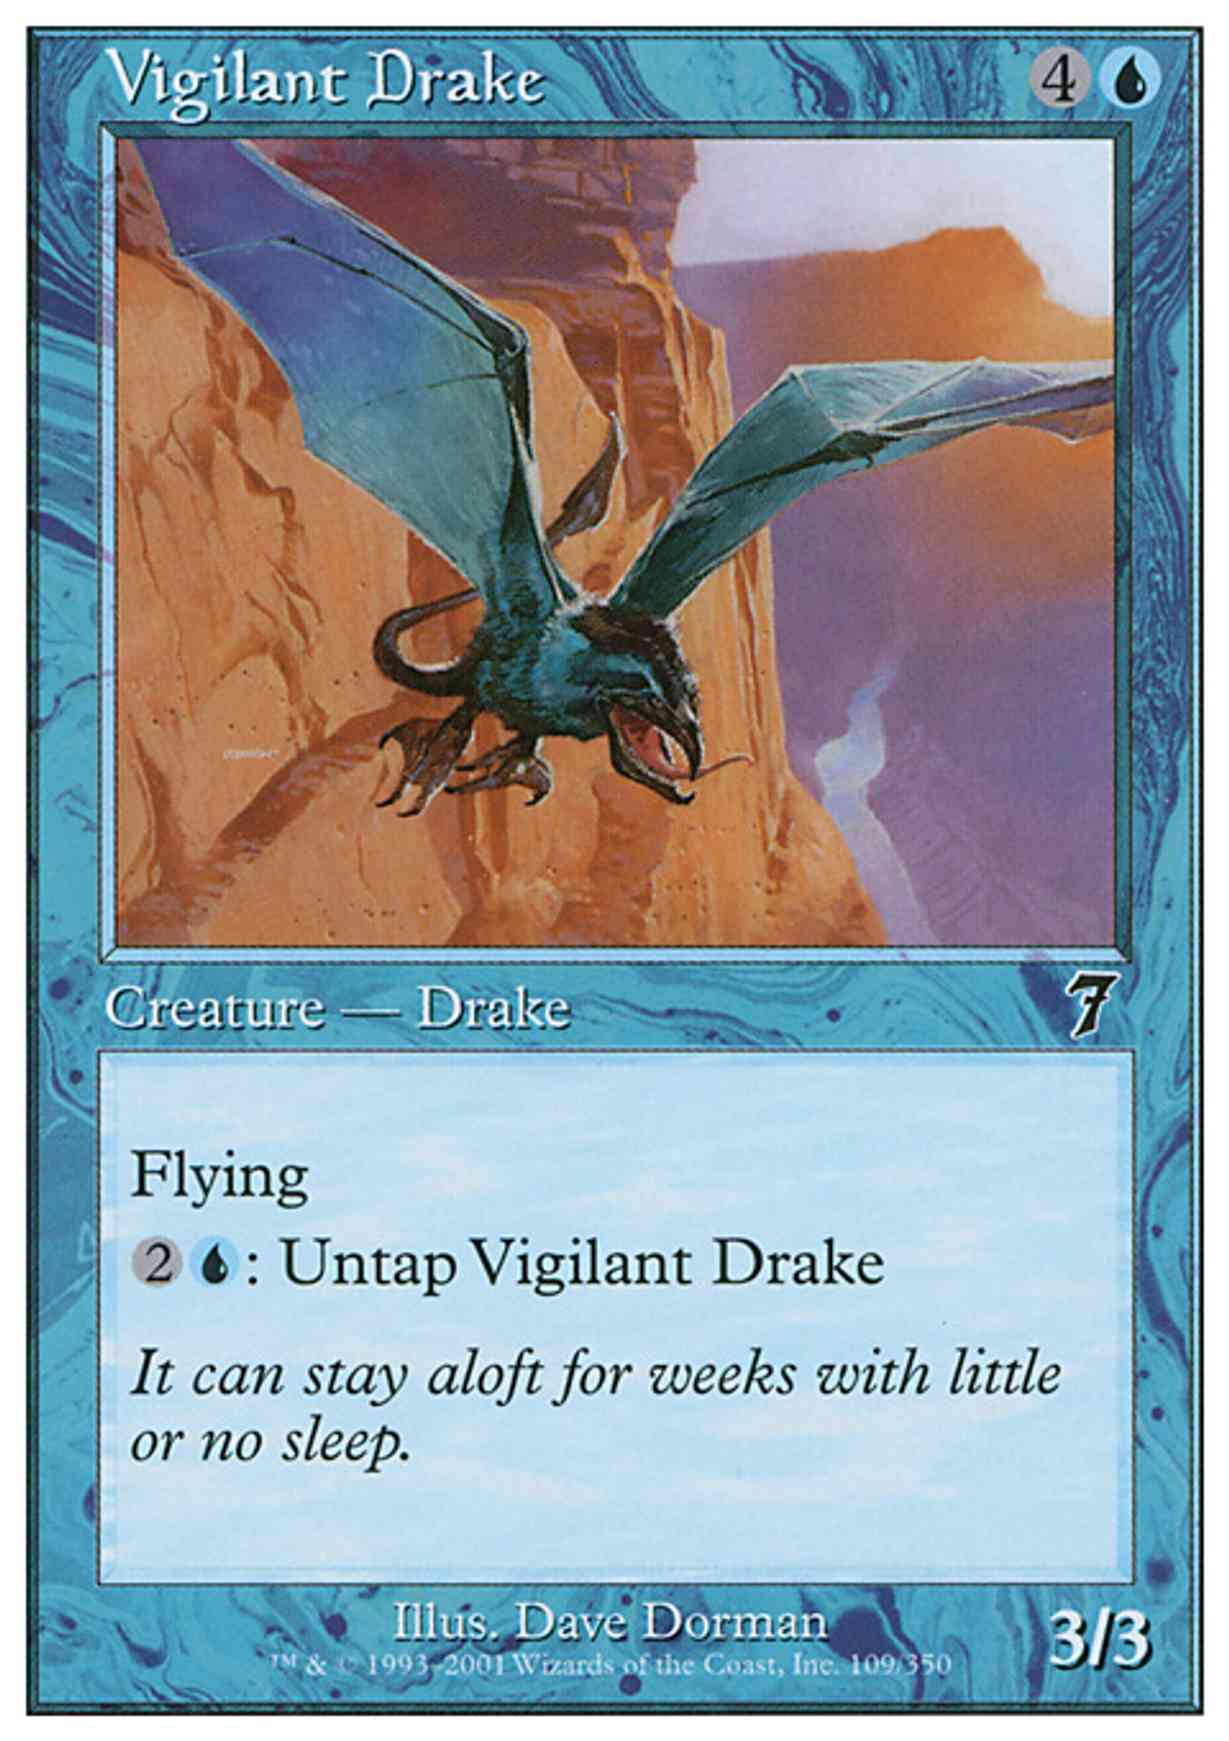 Vigilant Drake magic card front